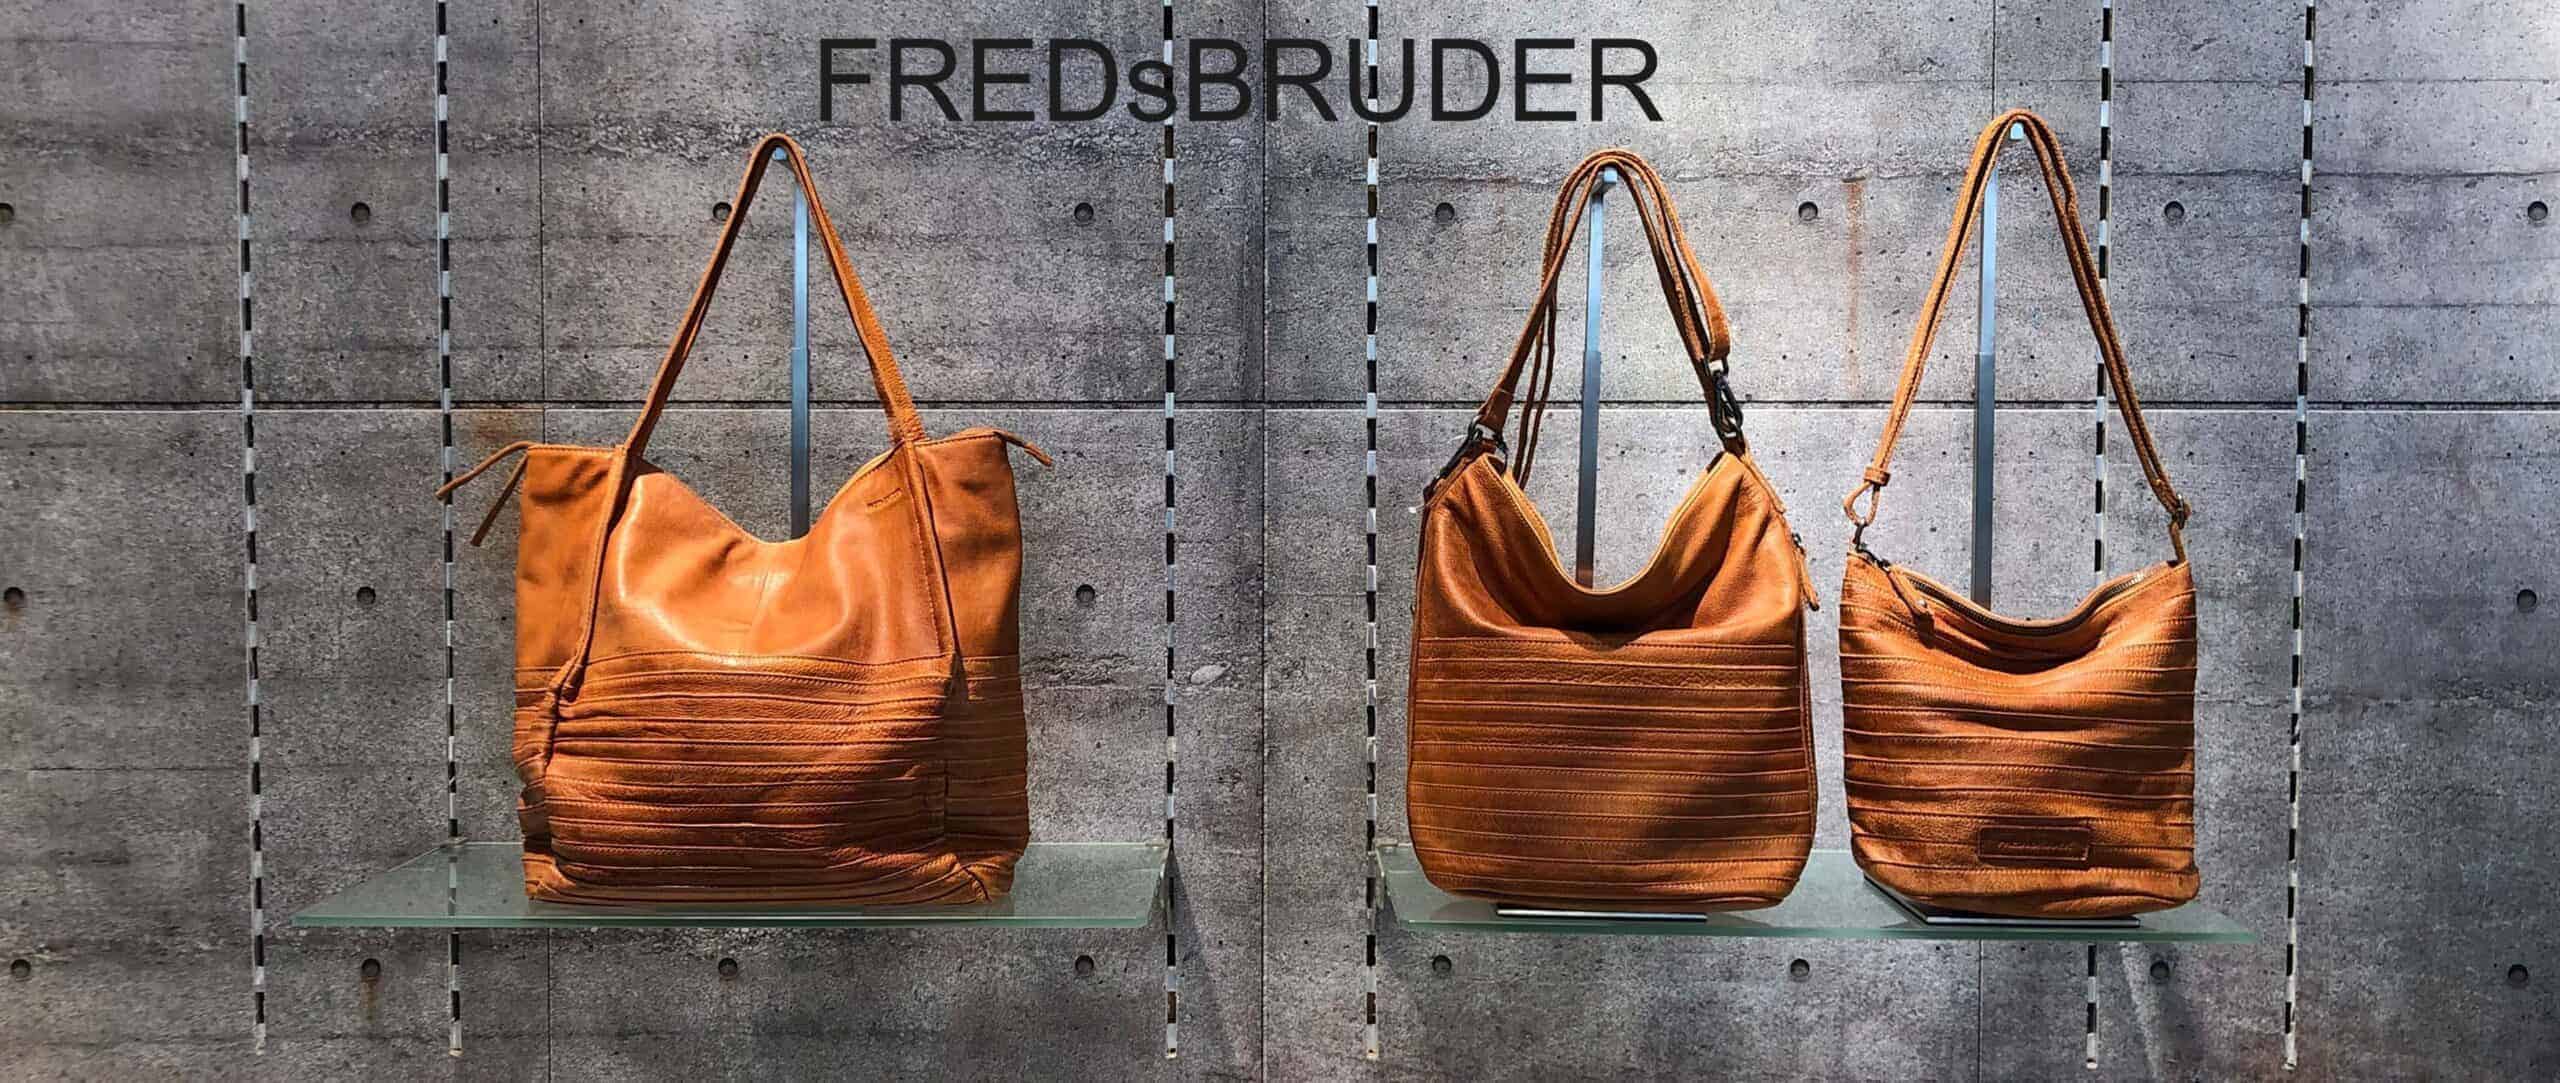 FredsBruder - Leder Fuchs